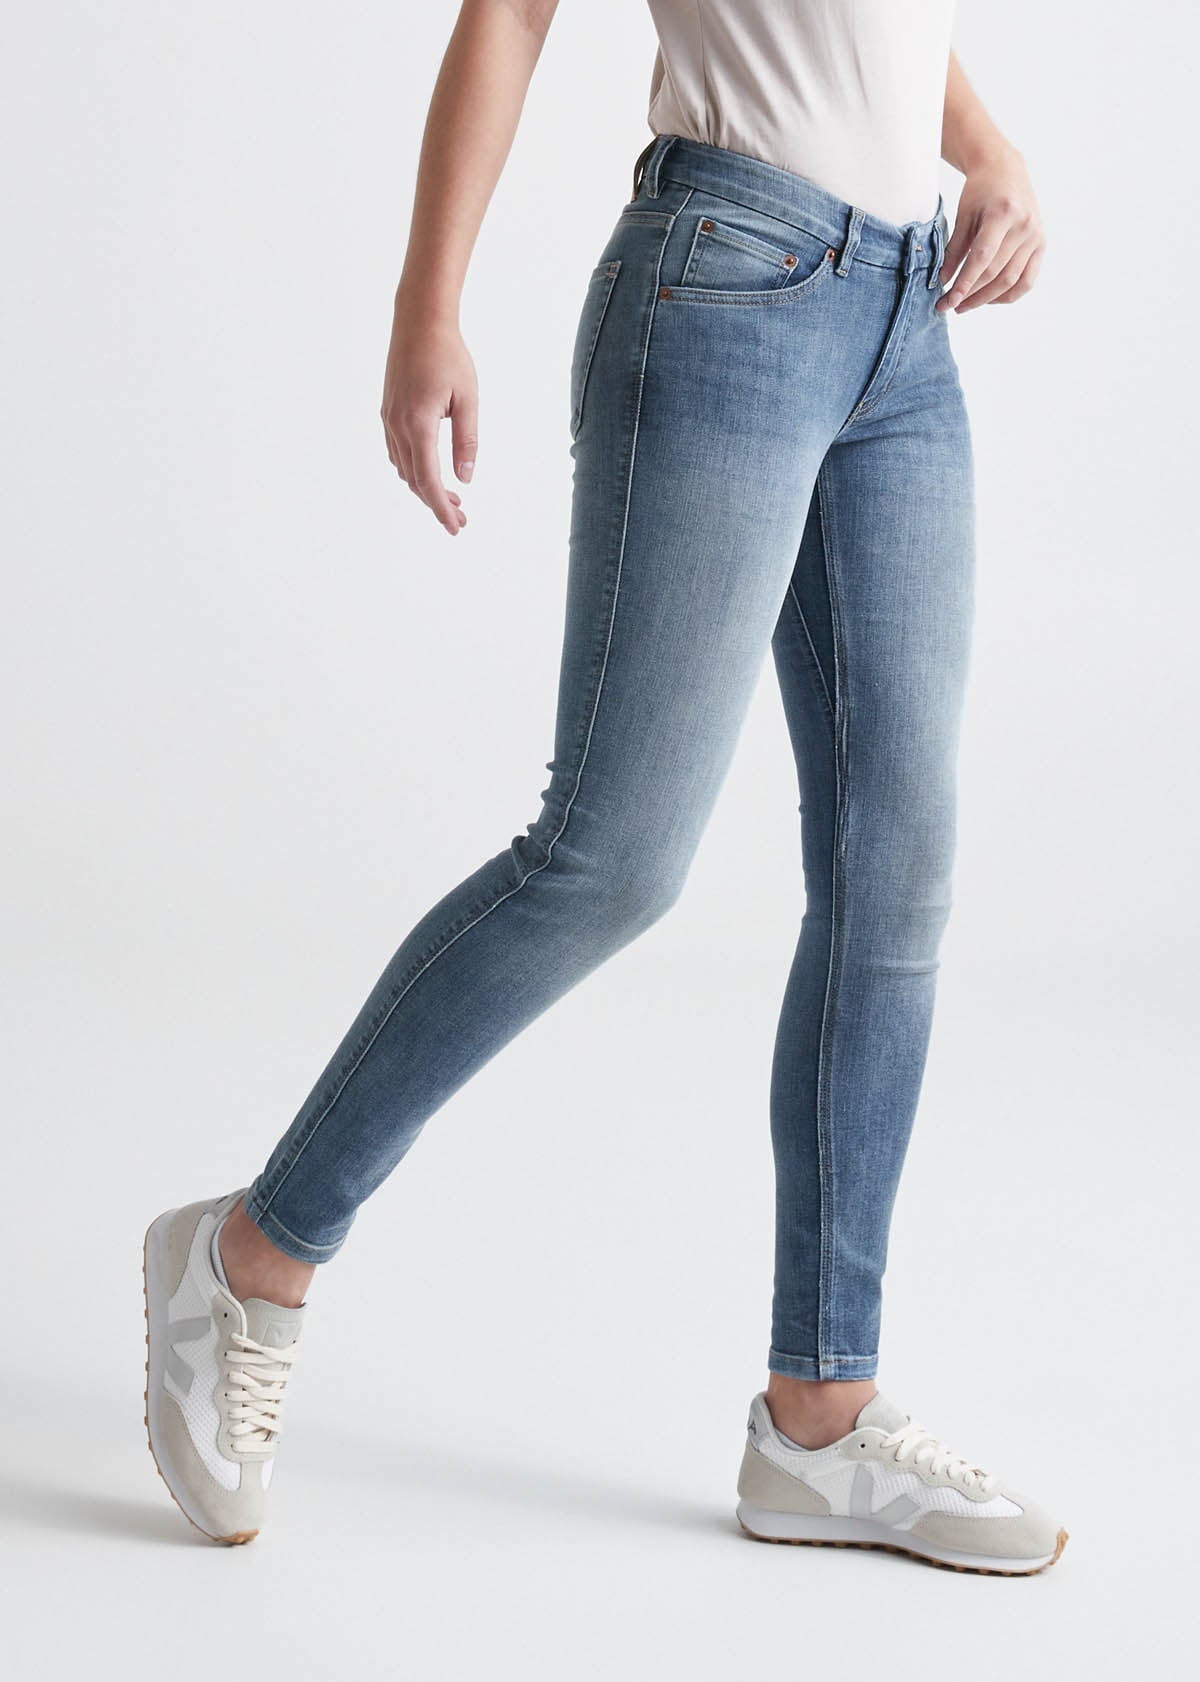 Men's Slim Fit Jean Pants Exclusive Design by Mario Morato | European Wear  | 2651 | Black | Slim fit men, Slim man, Slim fit jeans